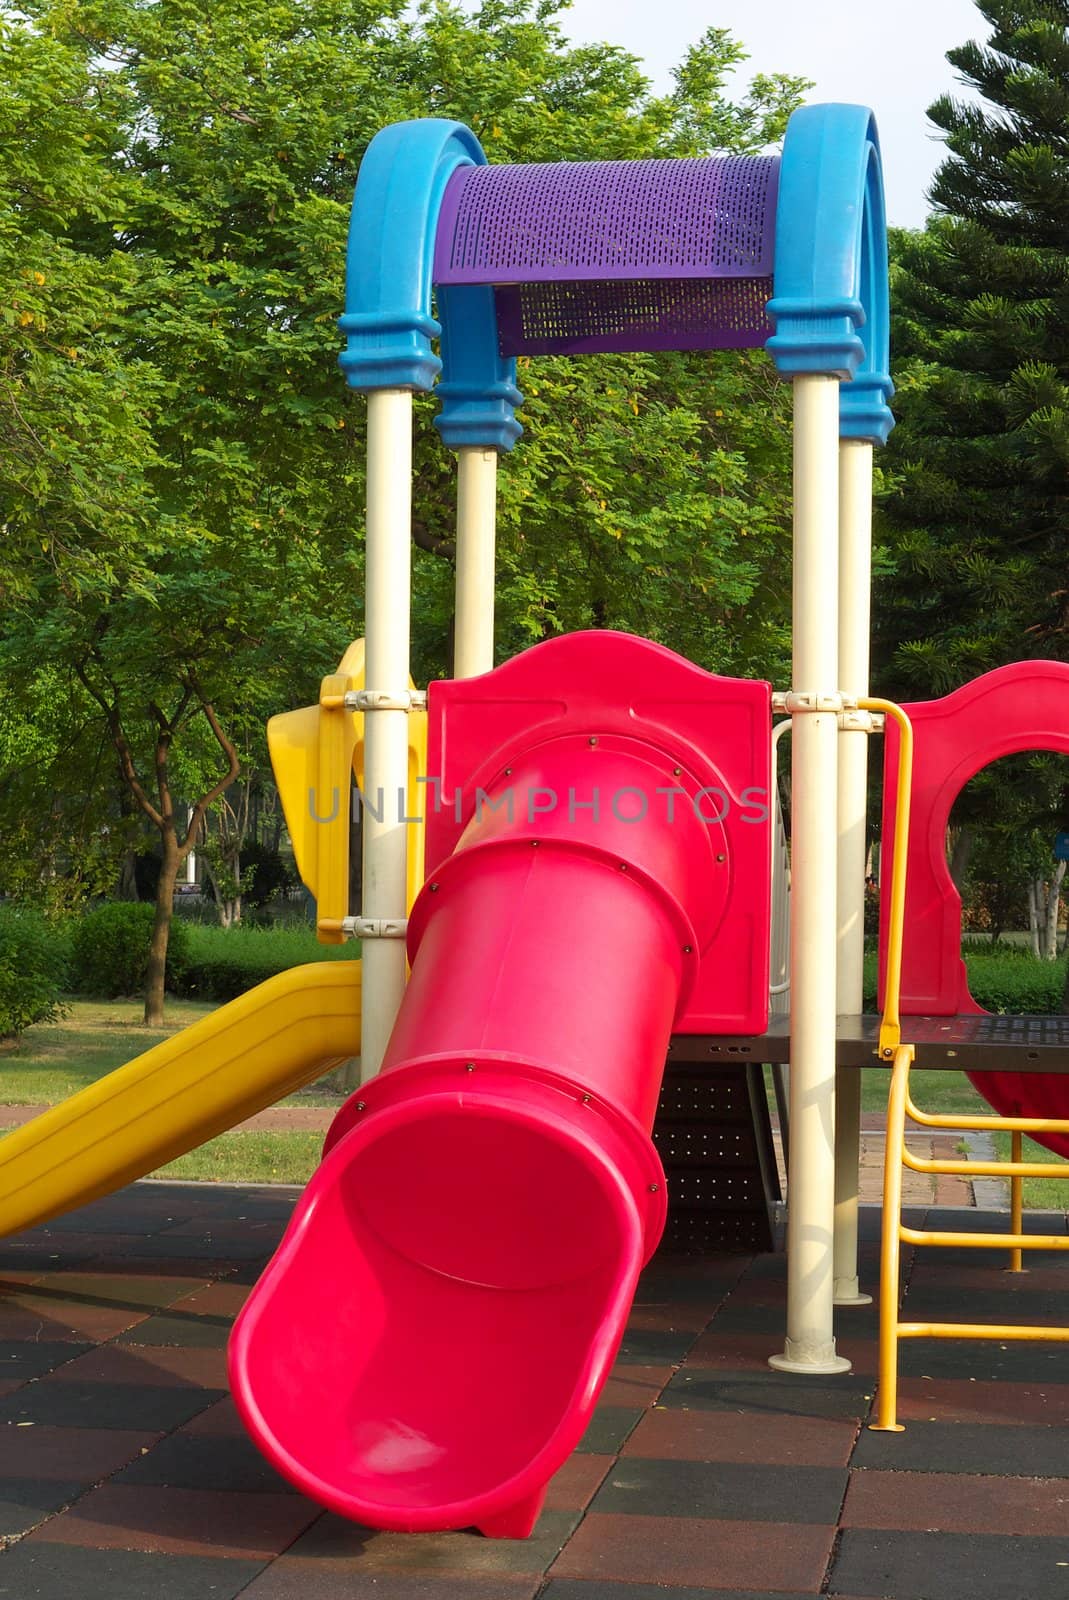 Slide board in the amusement park